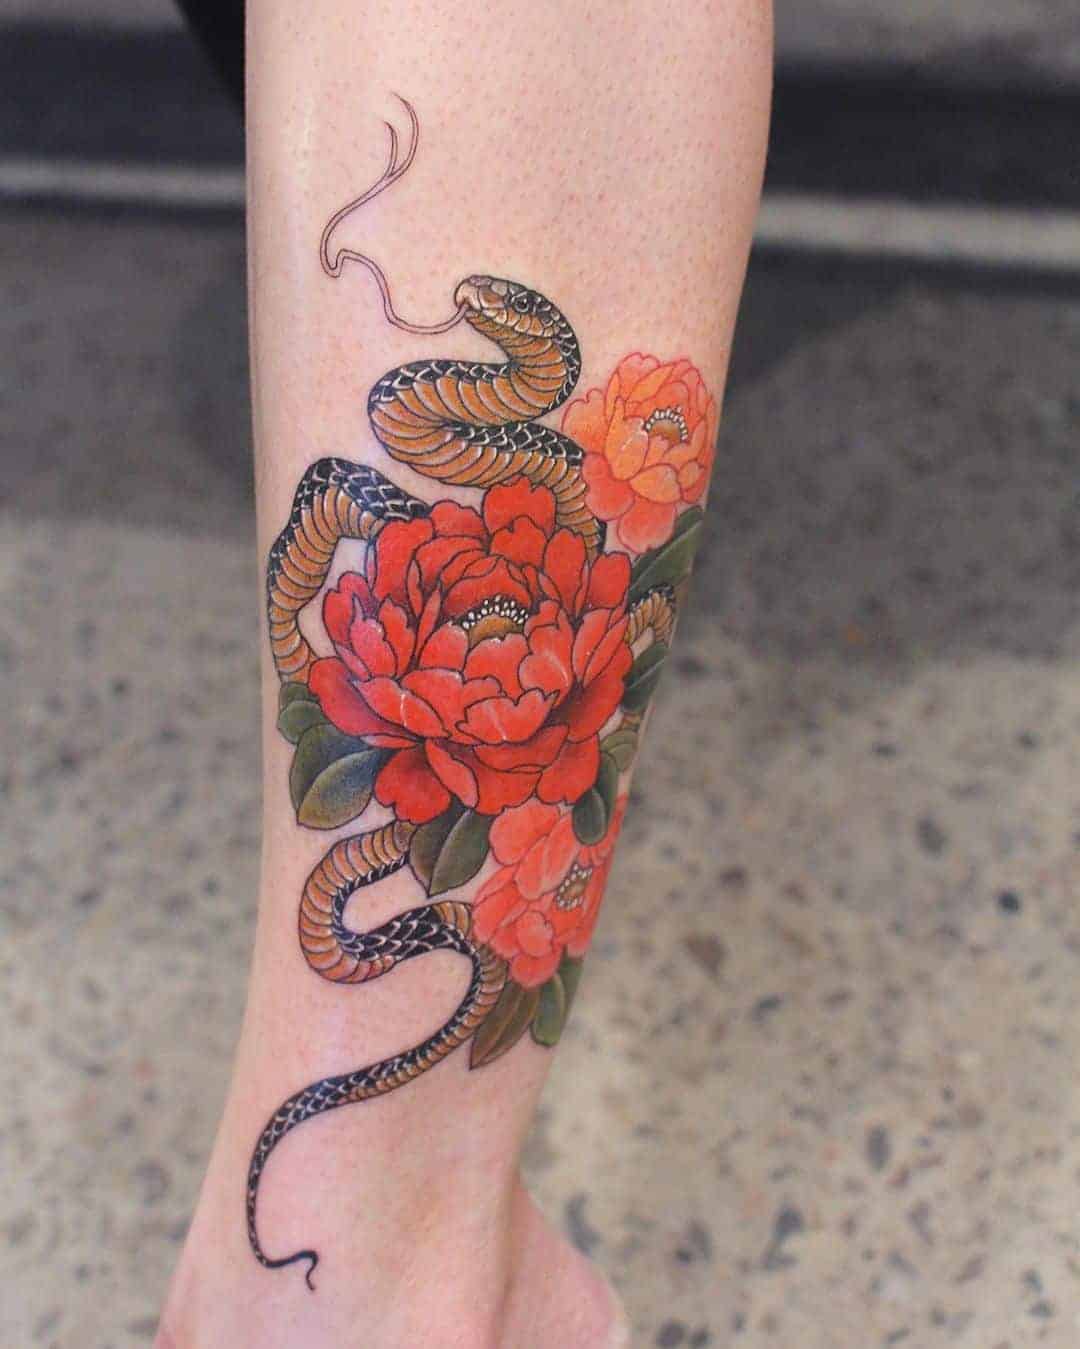 Dan b33 tattoo artist  Underbust snake and flowers 383tattoogc flowers  snake snakeyes underbust drpickles  Facebook